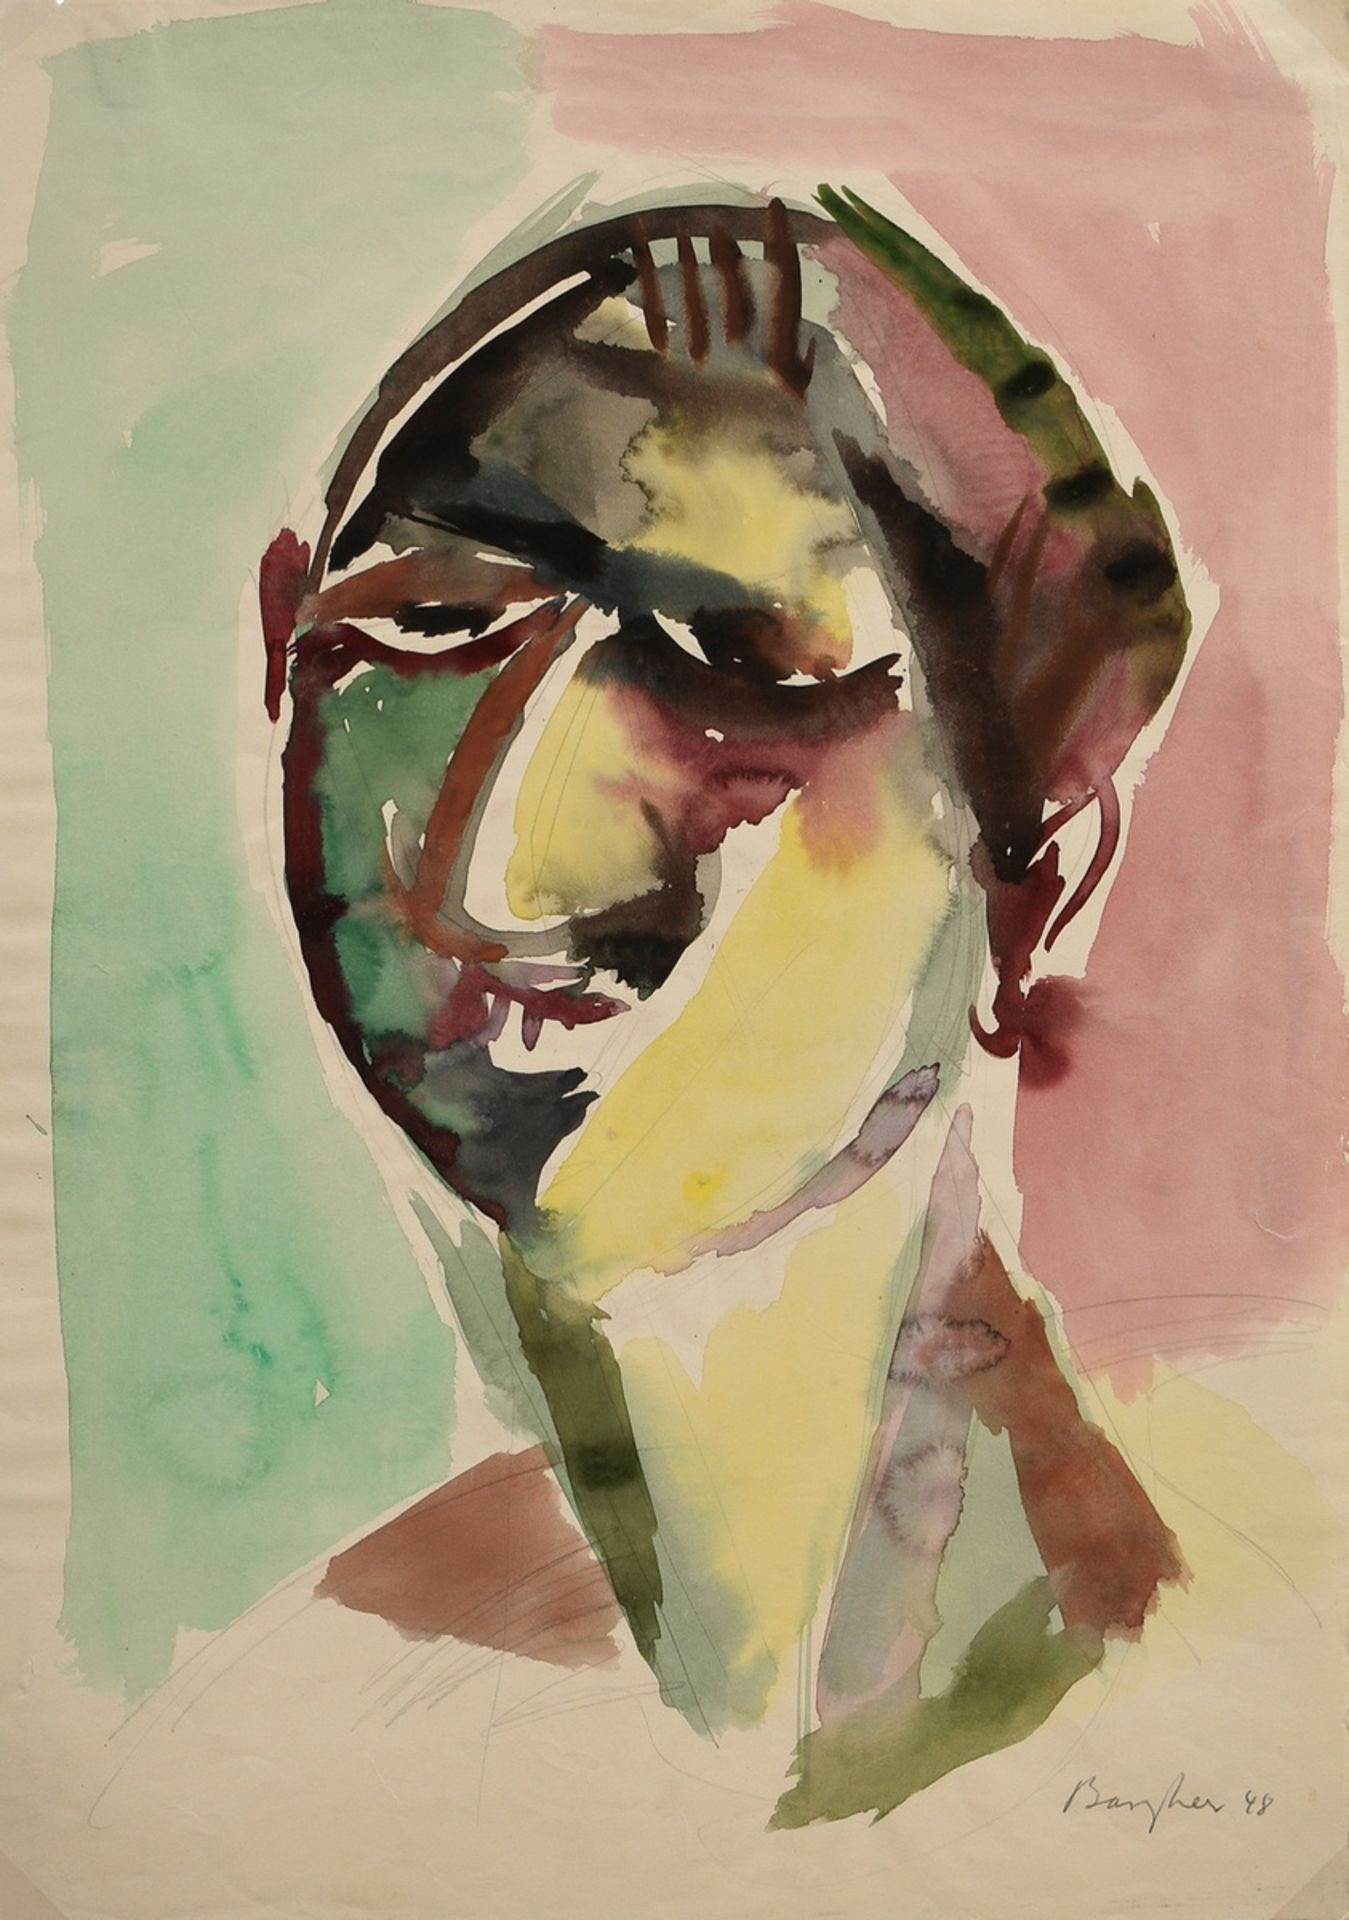 Bargheer, Eduard (1901-1979) "Portrait" 1948, Aquarell/Bleistift, u.r. sign./dat., 49,8x34,8cm, min